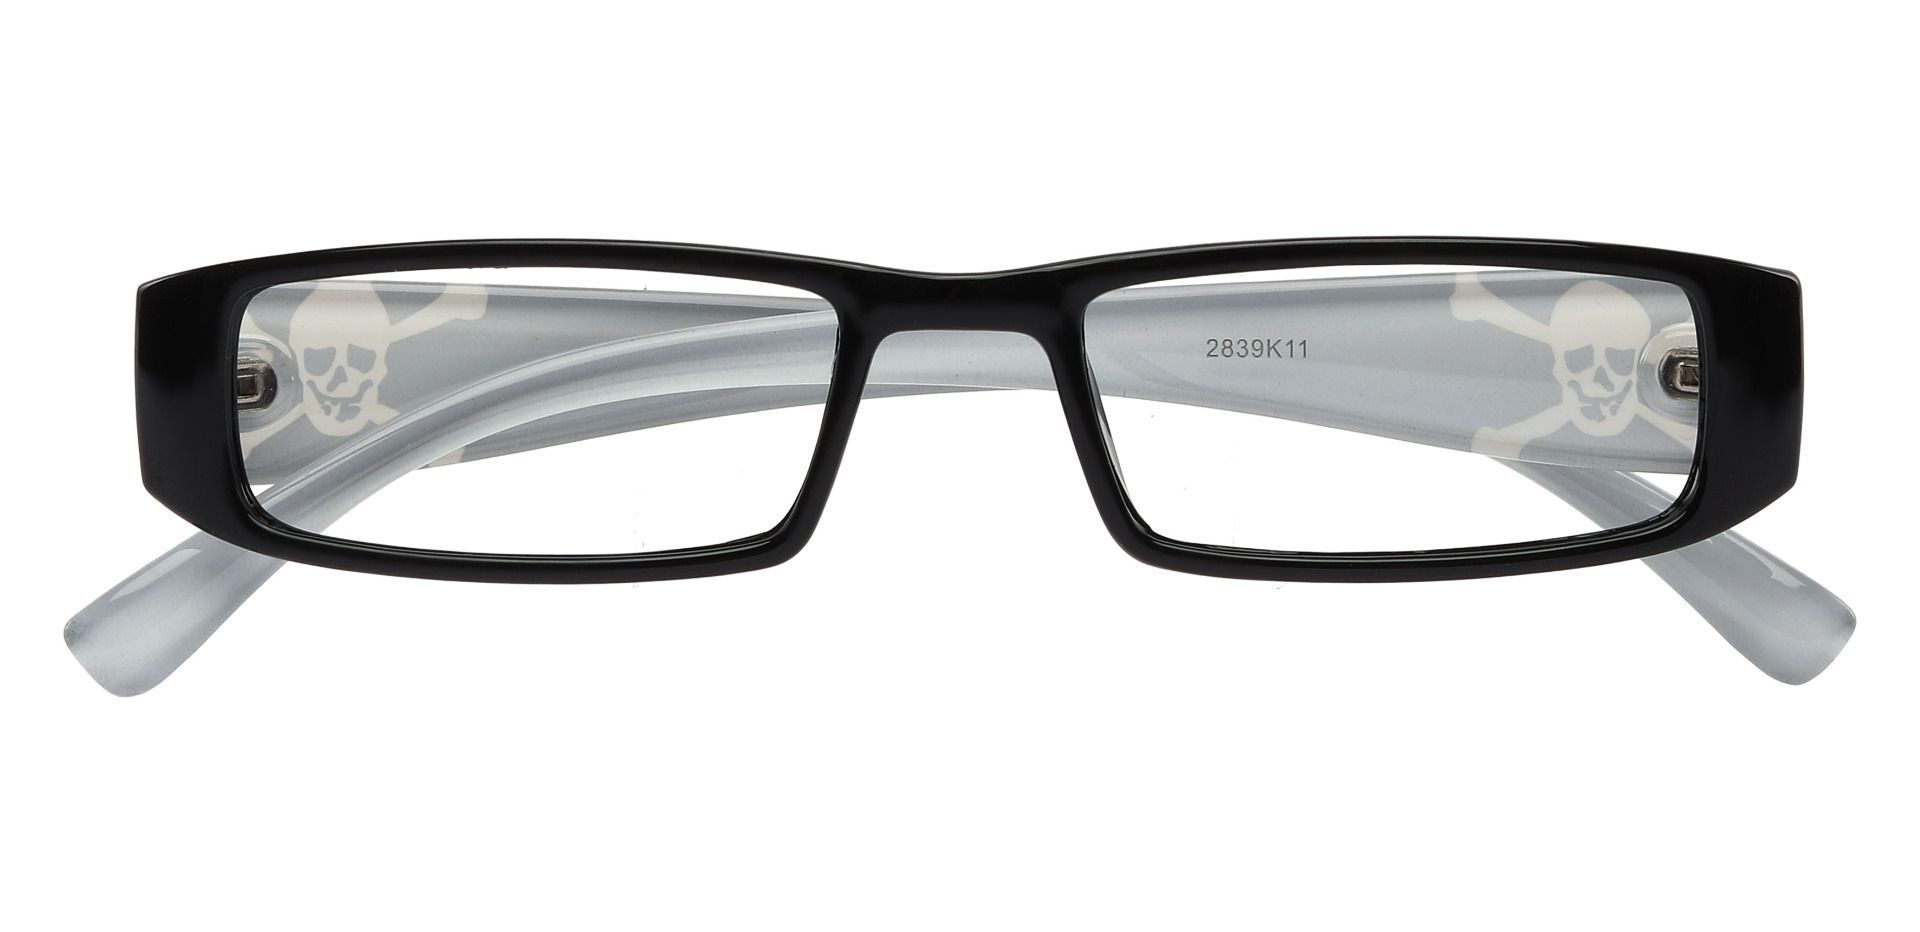 Buccaneer Rectangle Single Vision Glasses - Black